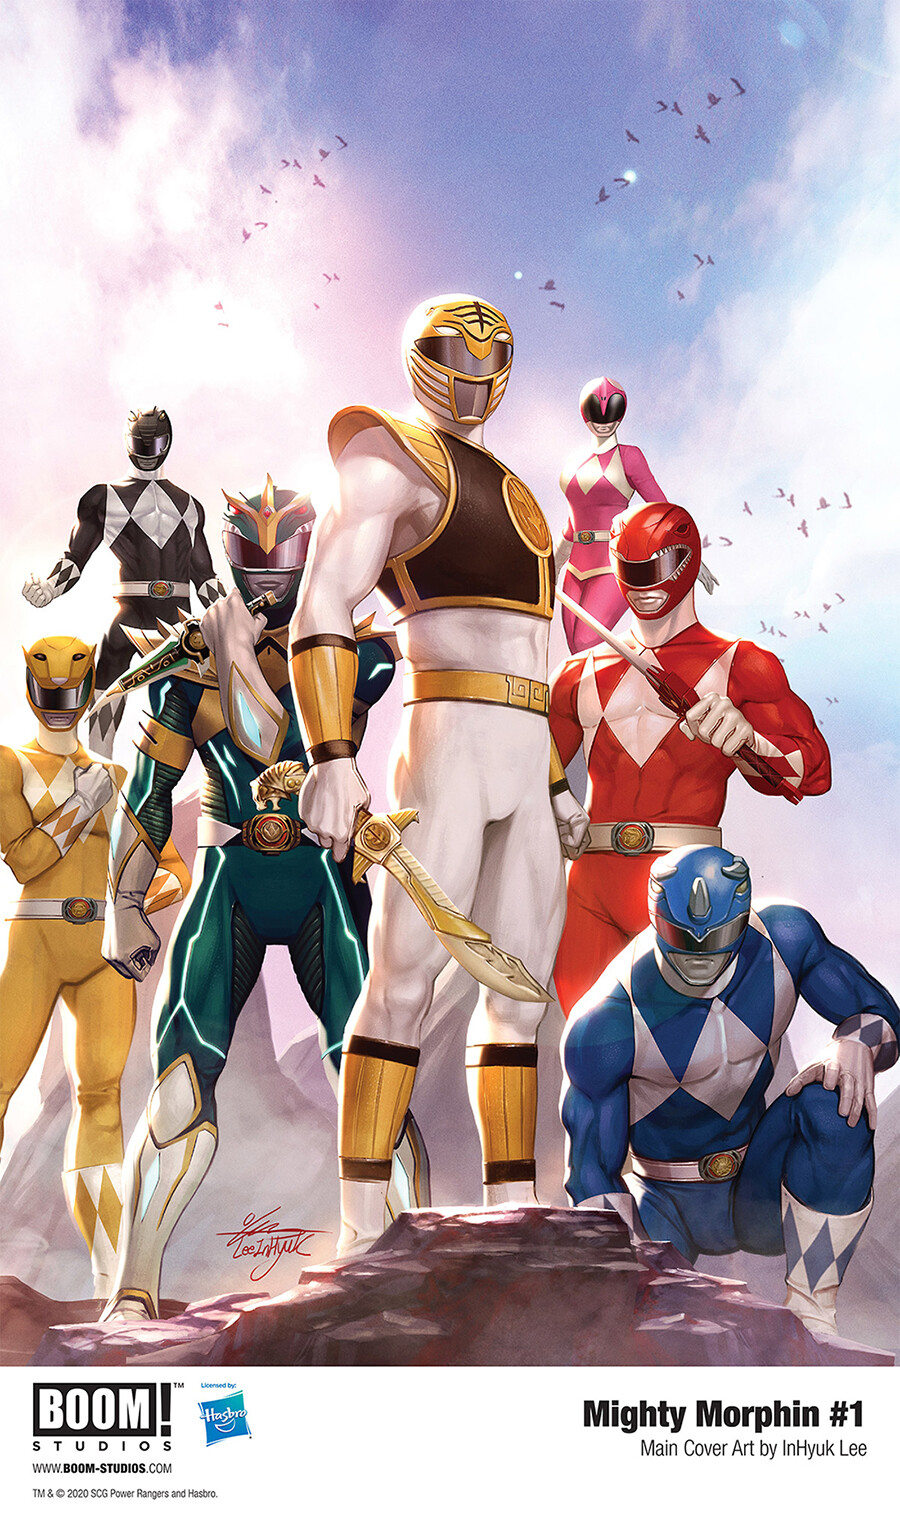 Book Info: https://www.previewsworld.com/Article/244002-BOOM-Studios-Begins-a-new-Era-of-Power-Rangers-Comics-with-Mighty-Morphin-1